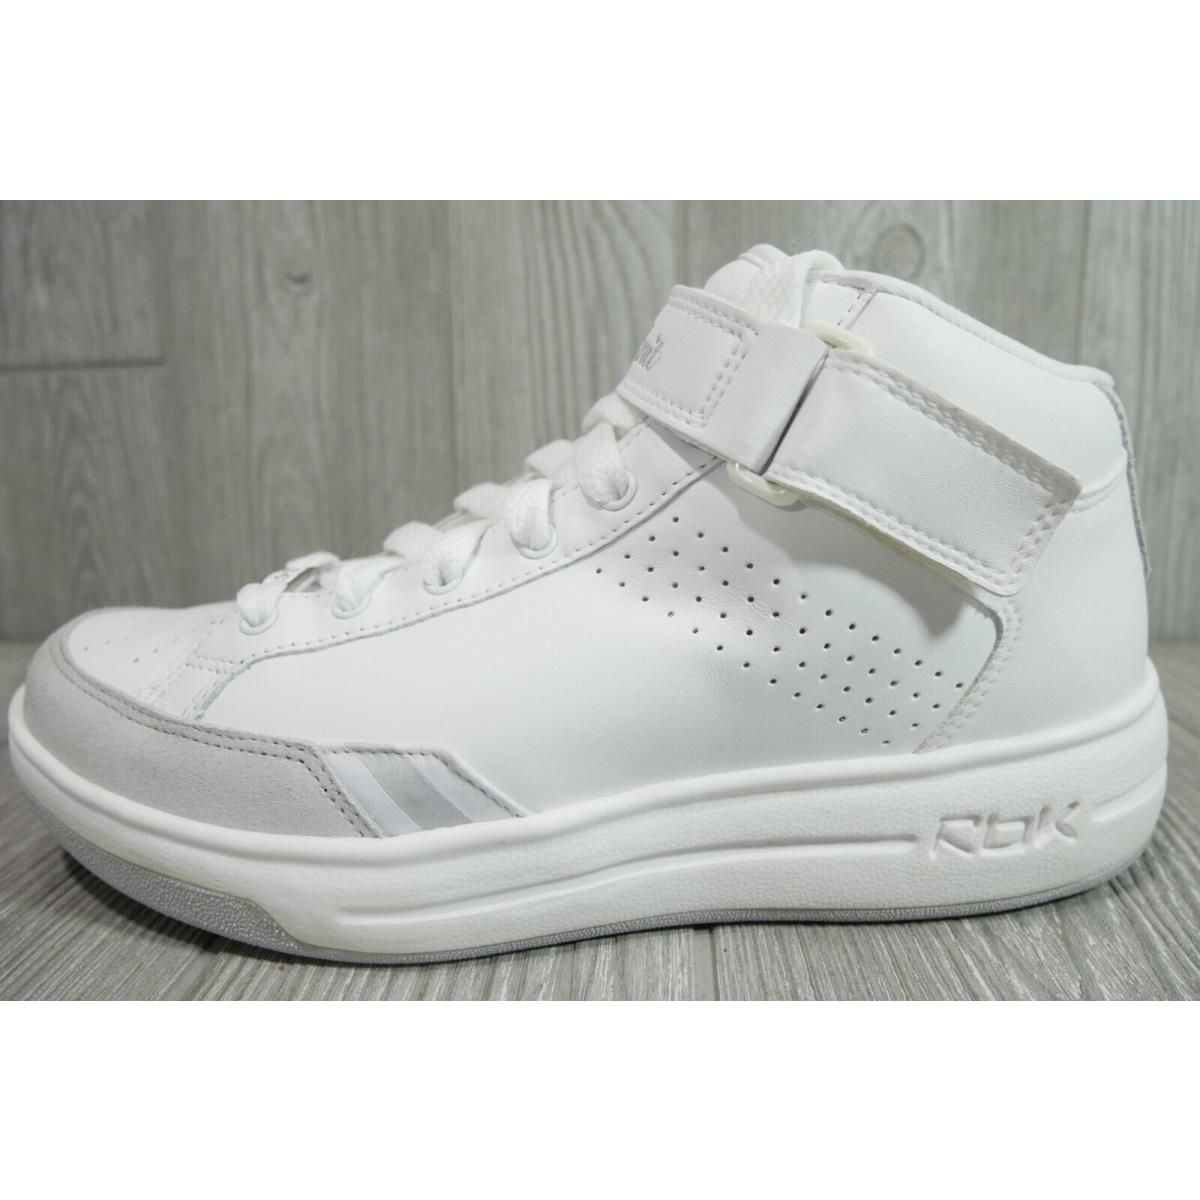 Vintage Reebok G-unit G6 Mid White Leather Shoes 2003 Mens Size 7 Oss